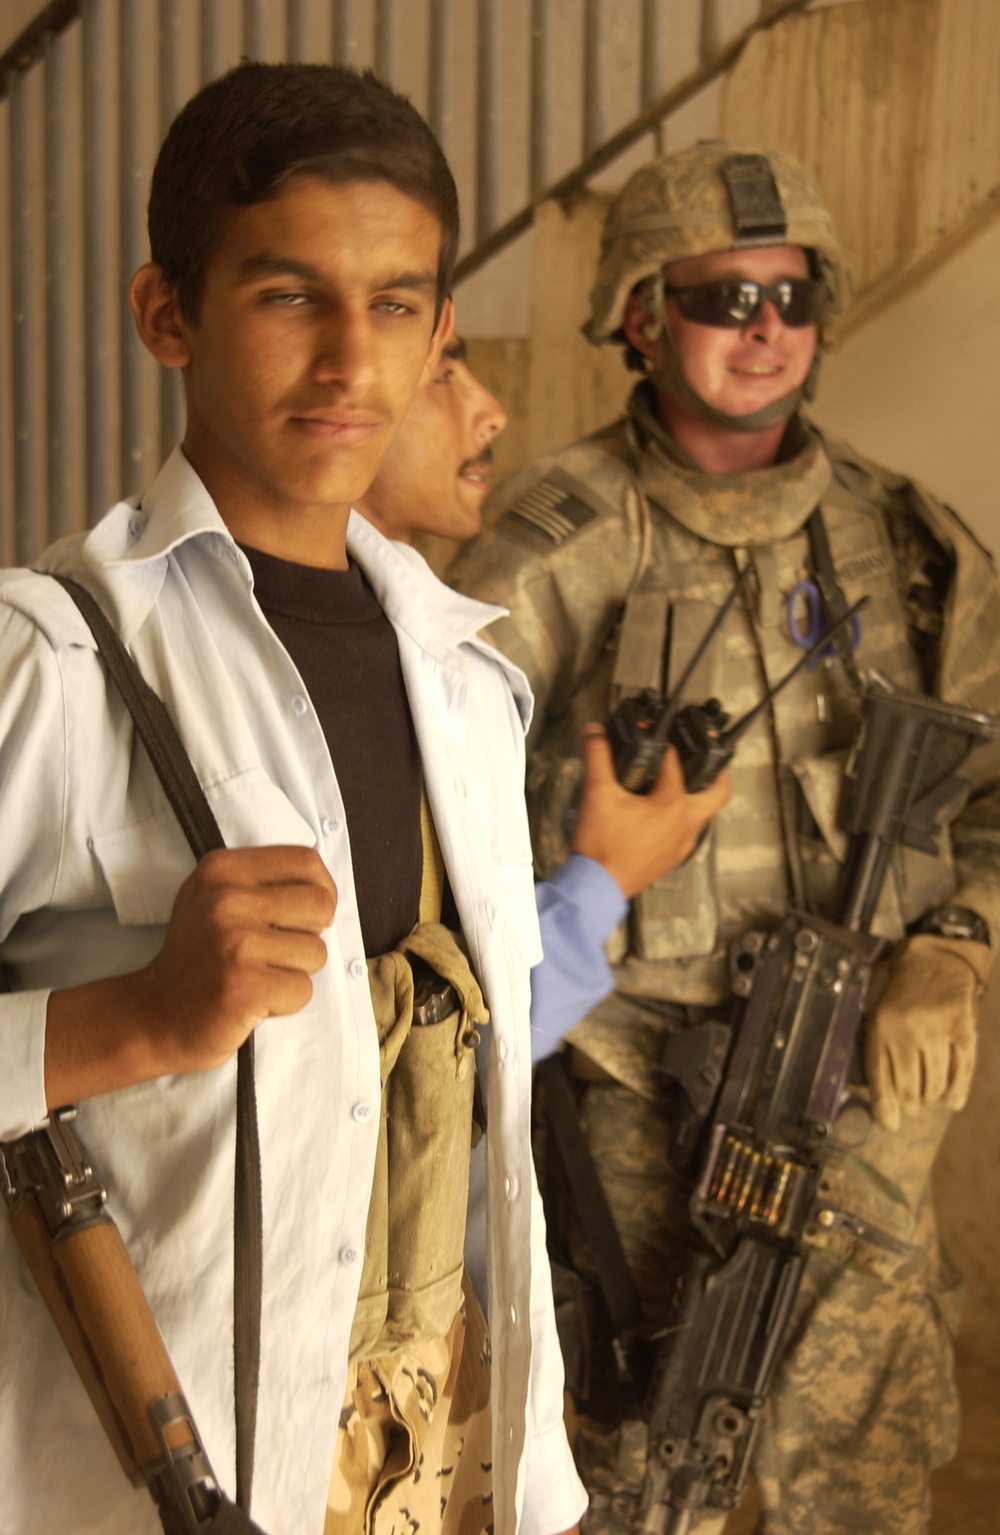 U.S. Army Military Police work with Iraqi police